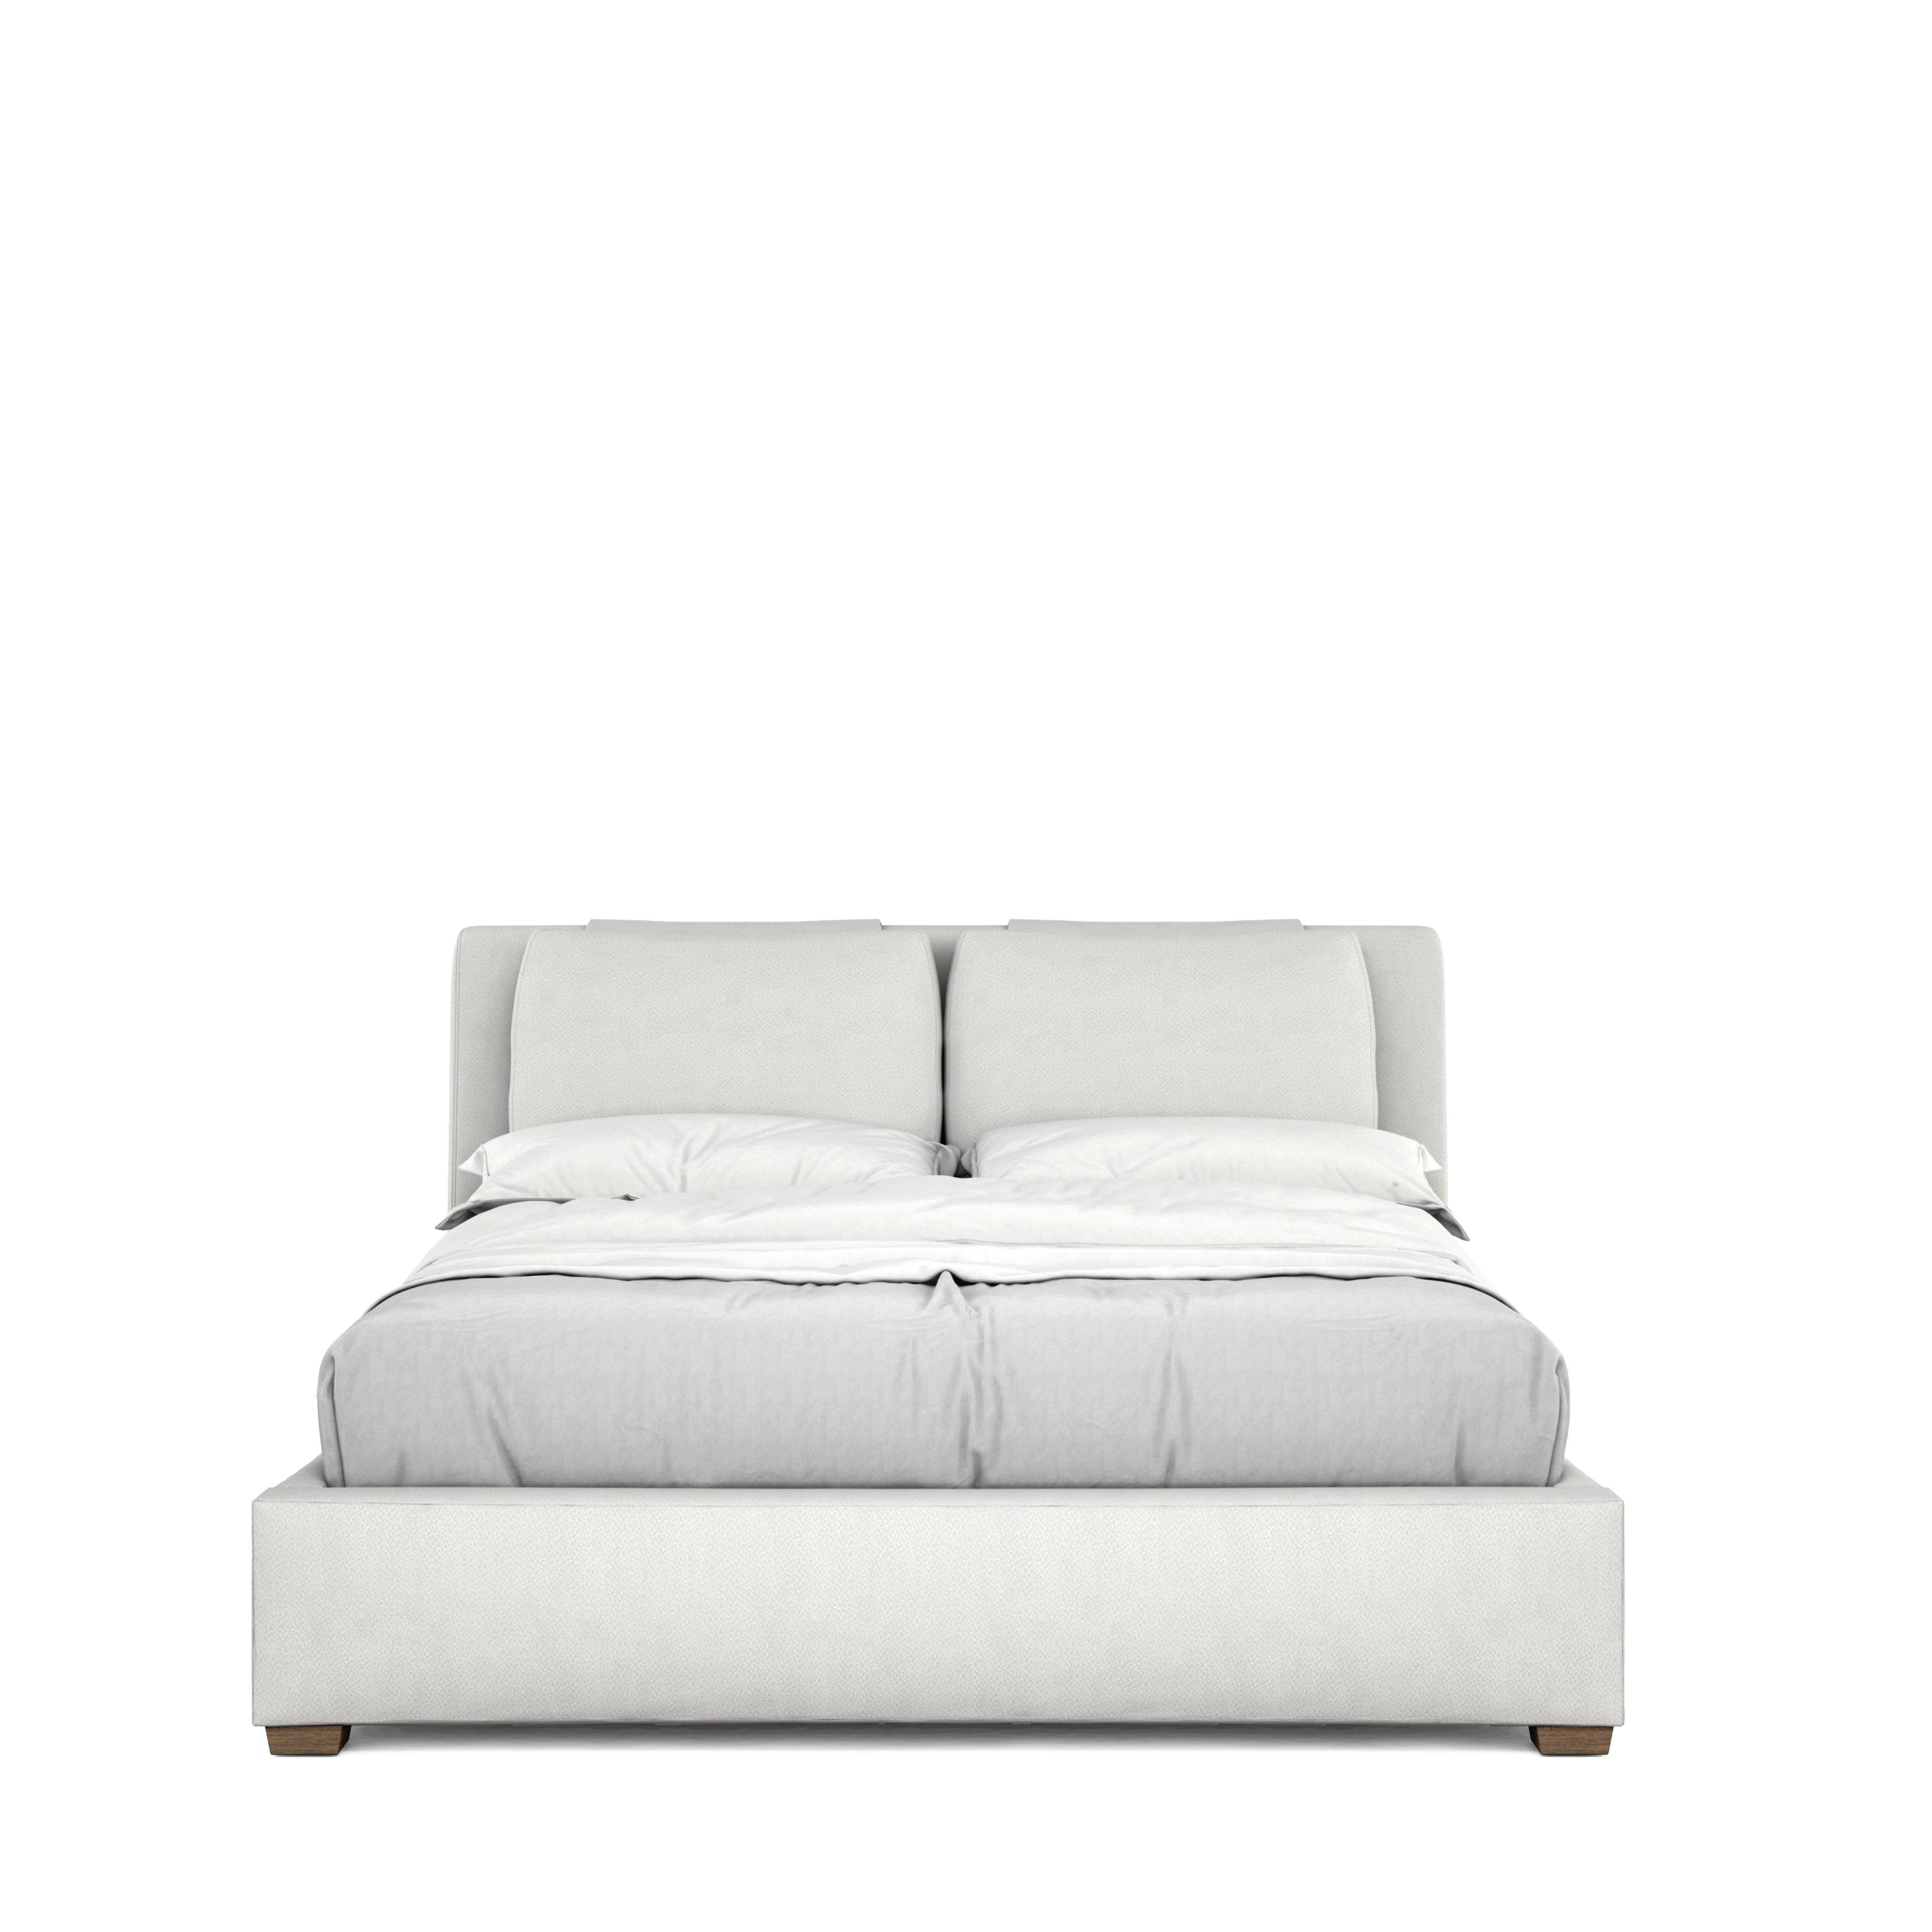 Modern, Transitional Platform Bed Stockyard 284126-2303 in Light Gray, White Fabric